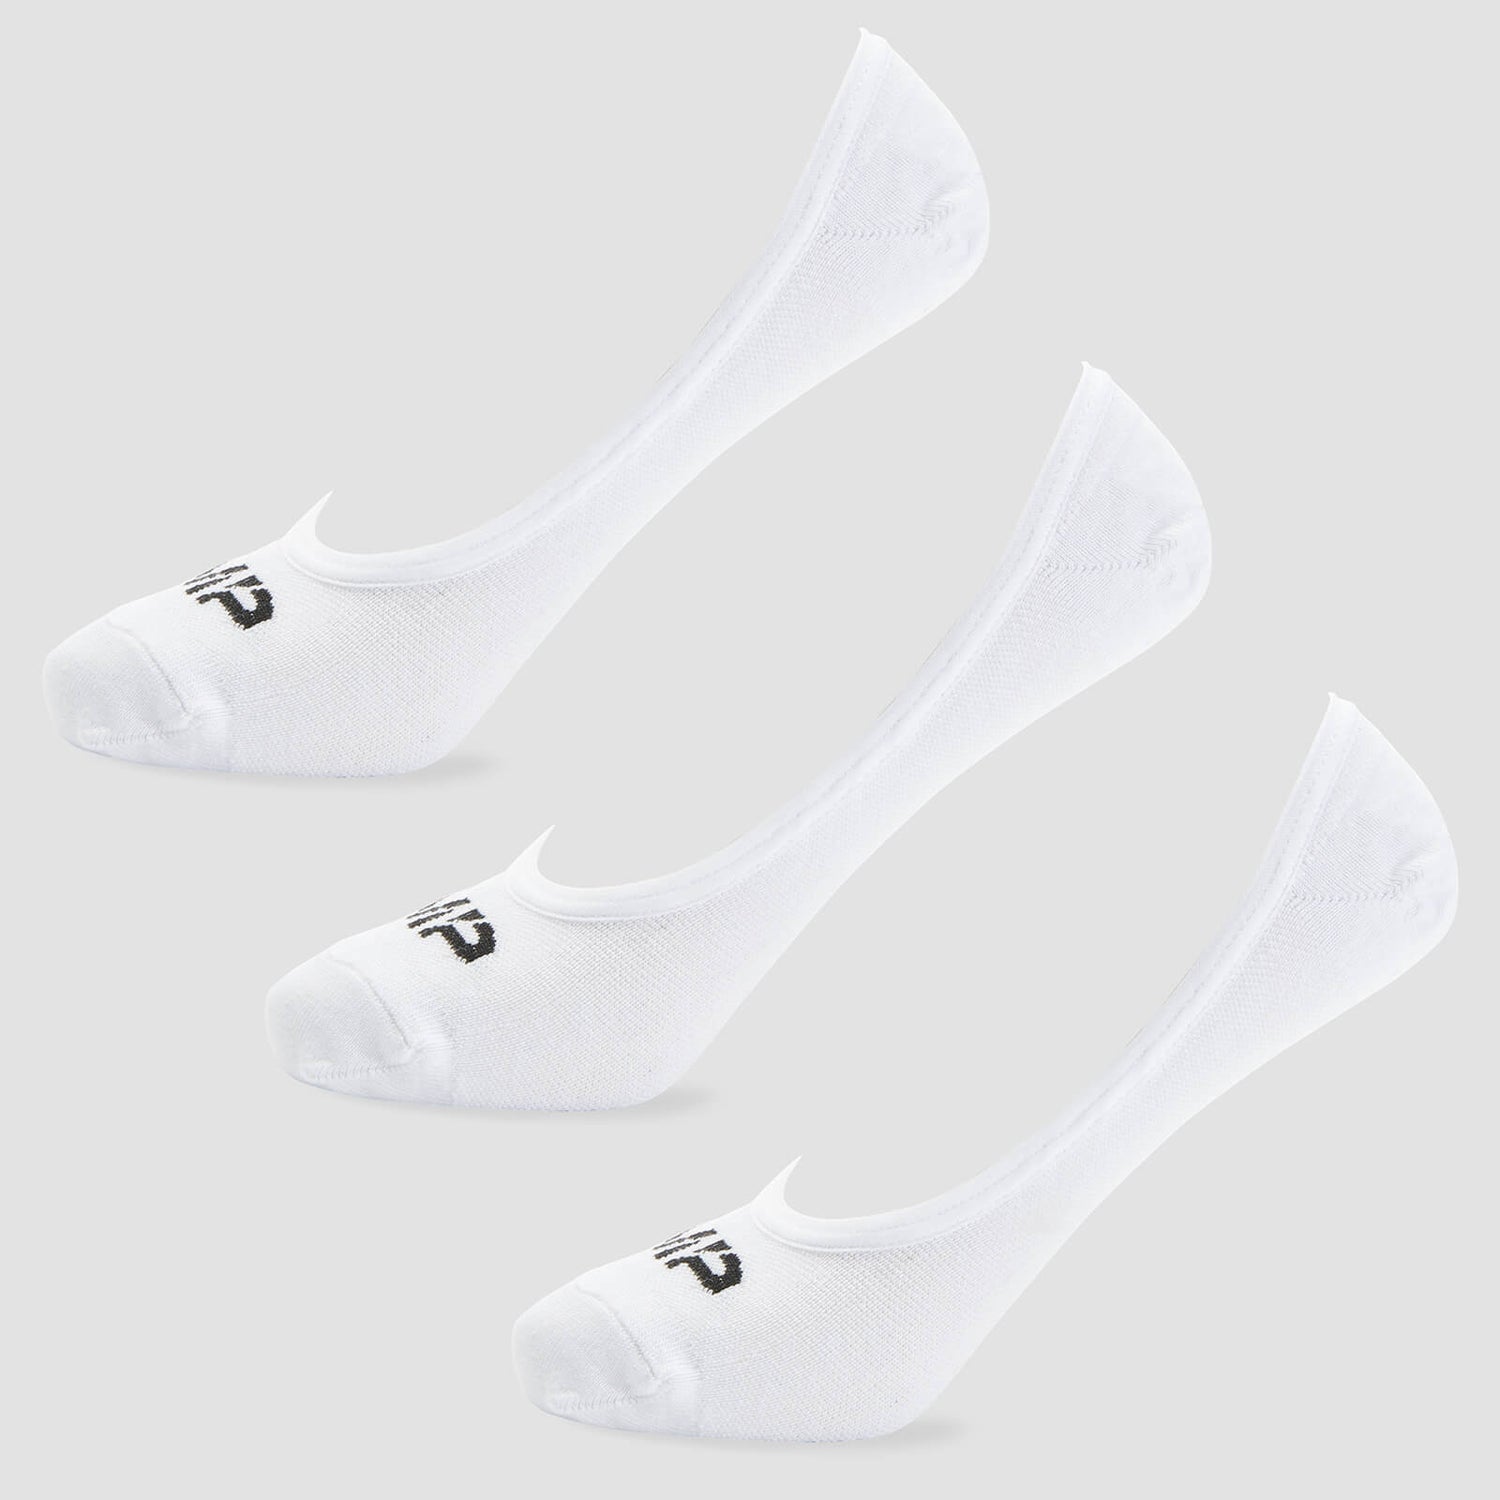 Men's Invisible Socks - Weiß - UK 6-8